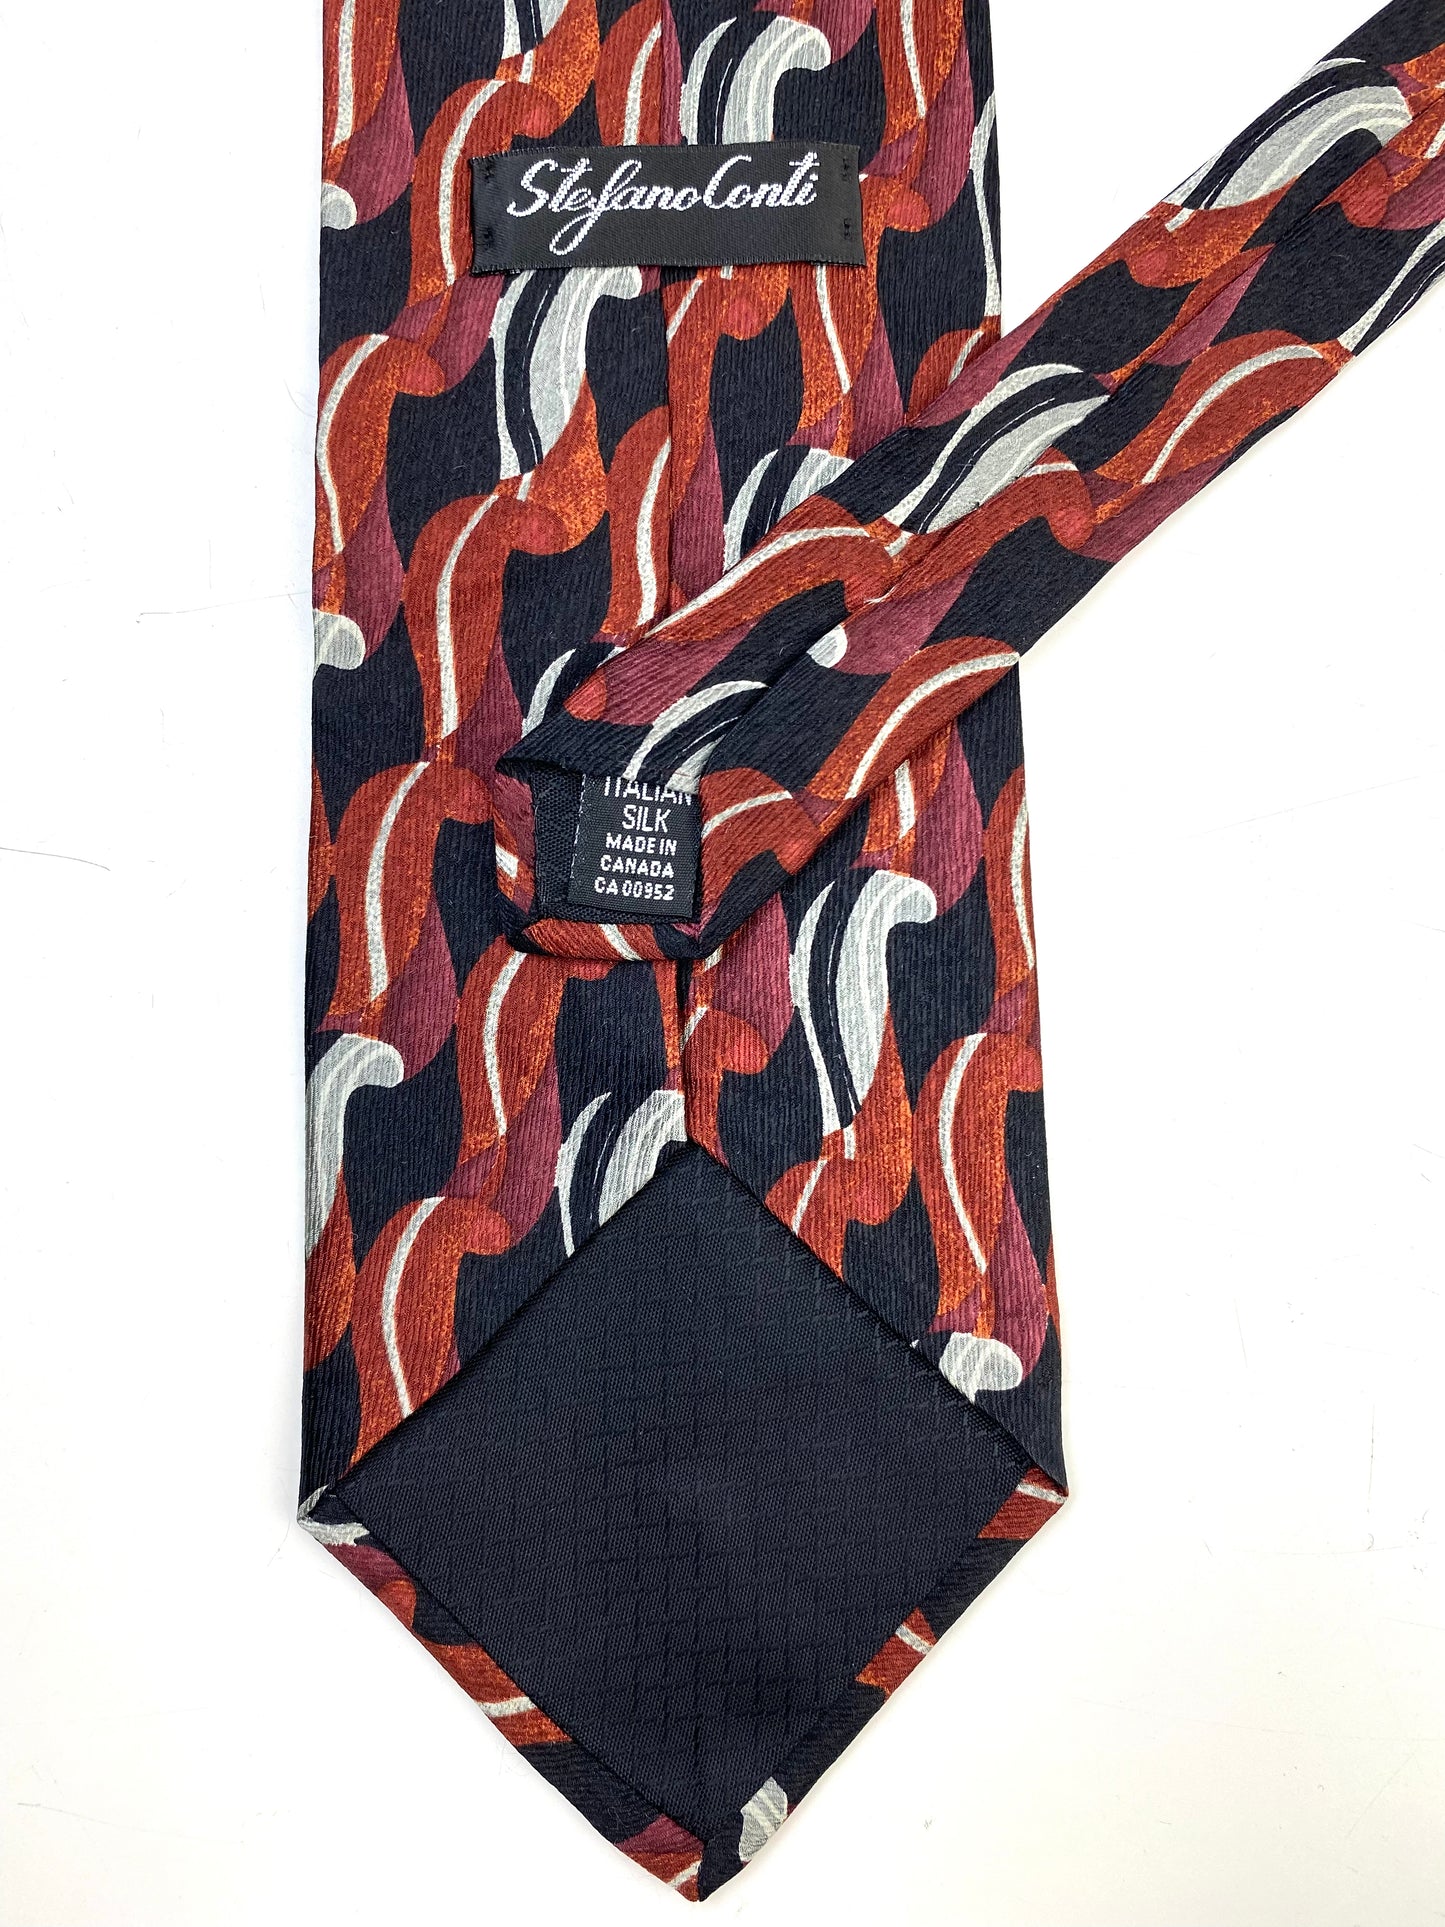 Back and labels of: 90s Deadstock Silk Necktie, Men's Vintage Black/ Brown/ Grey Abstract Pattern Tie, NOS